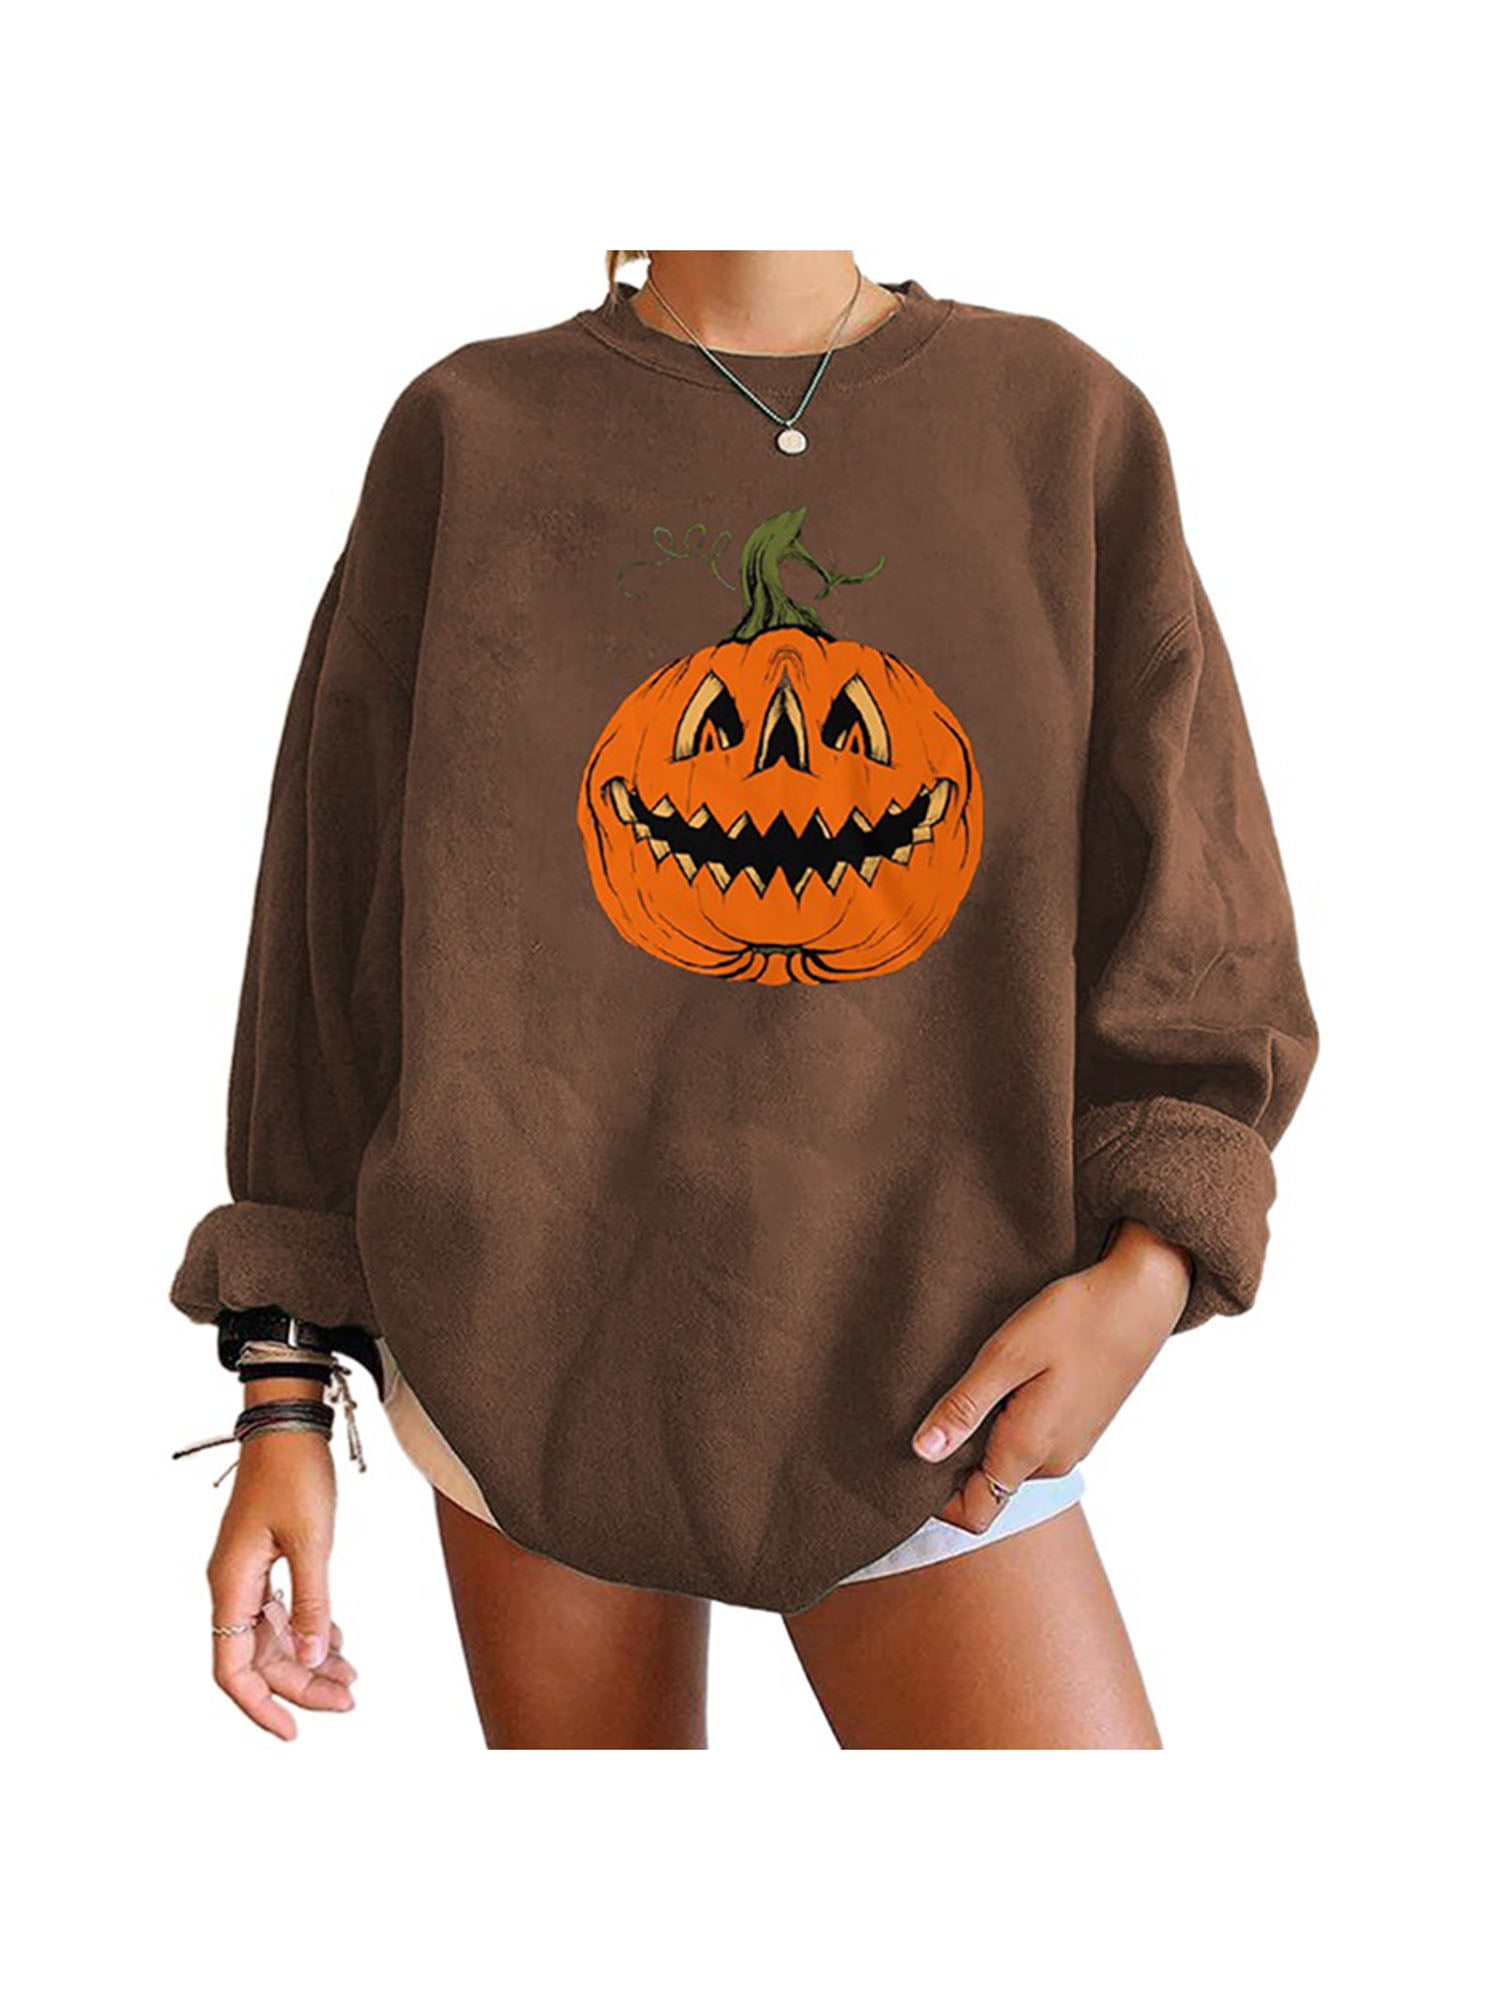 Women's Halloween Shirt Fashion Pumpkin Printed Long Sleeve Pullover Tops Casual Crew Neck Sweatshirts 